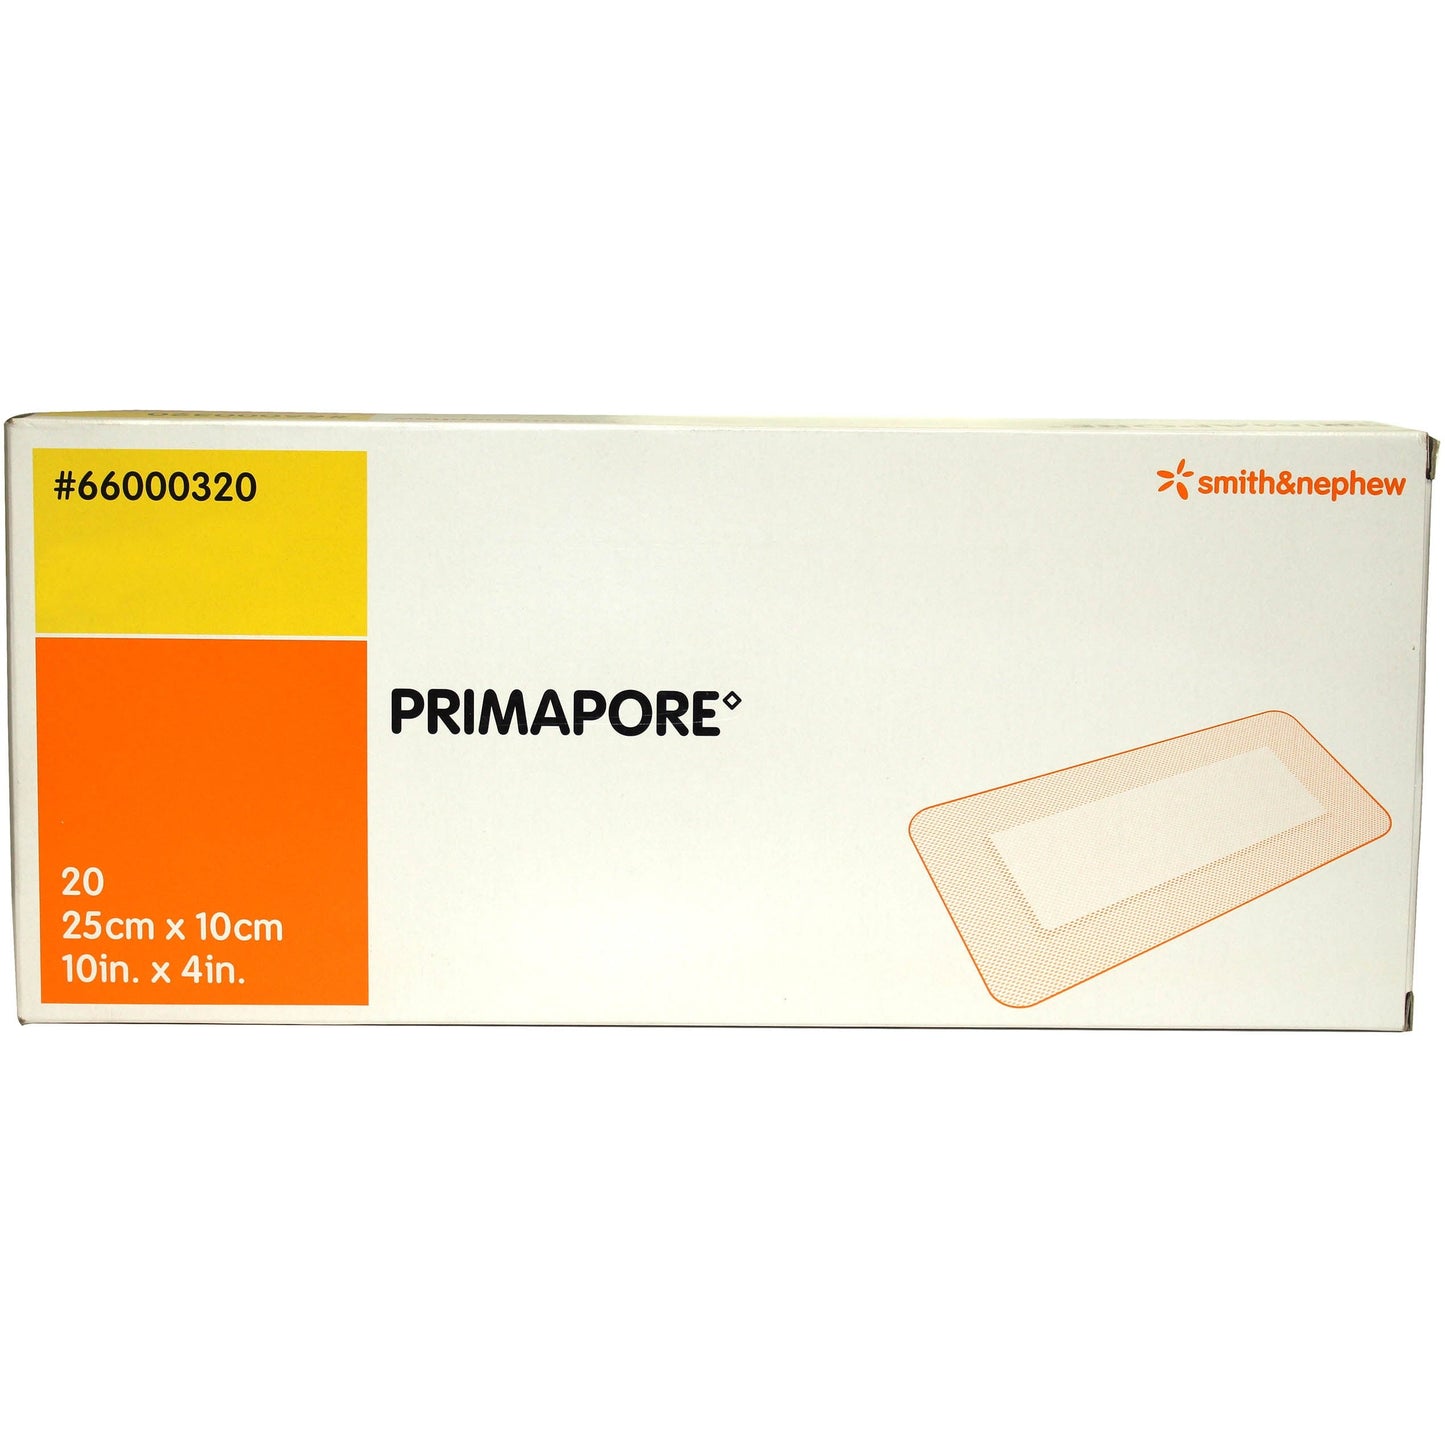 Primapore Post-Op Adhesive Dressing 25 x 10cm Box of 20